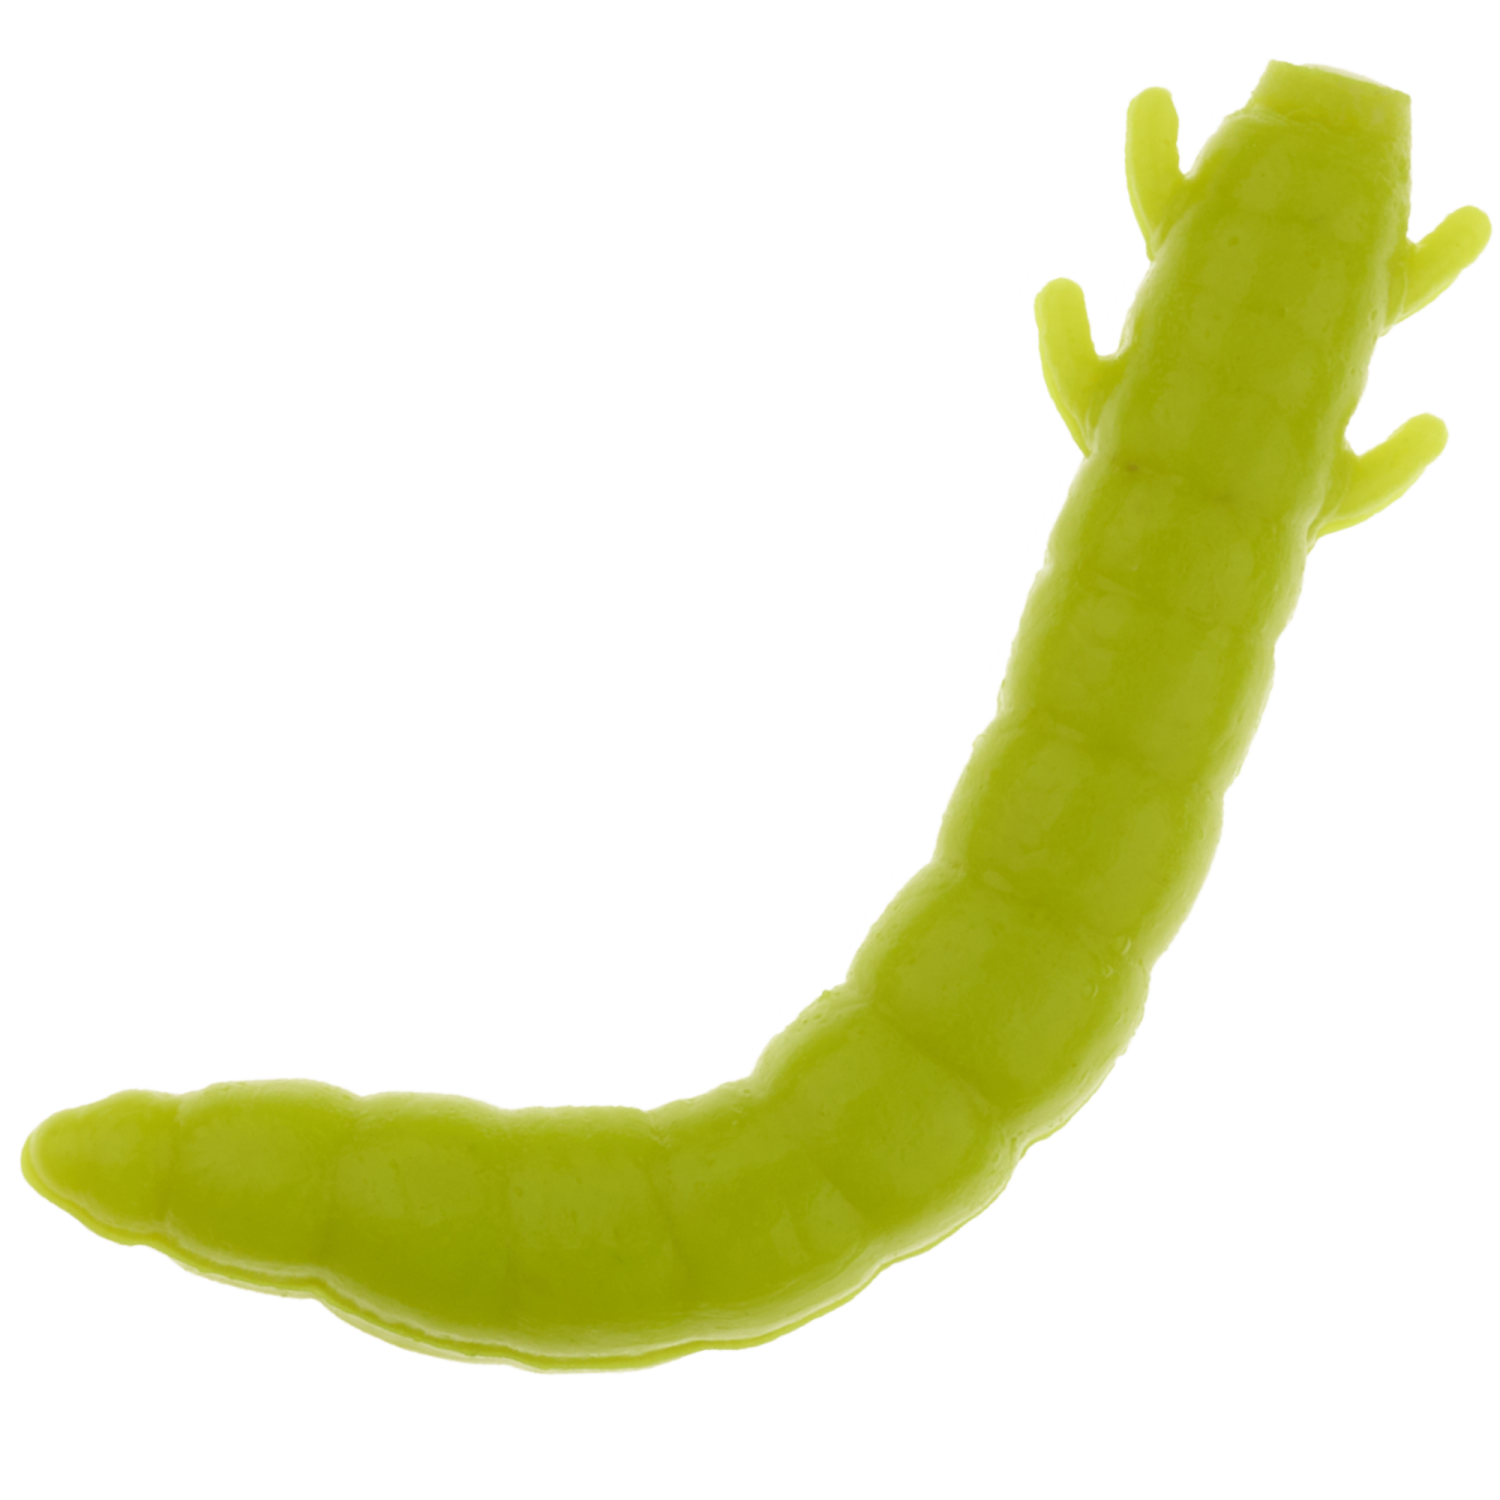 Приманка силиконовая Soorex Pro King Worm 42мм Cheese #104 Chartreuse